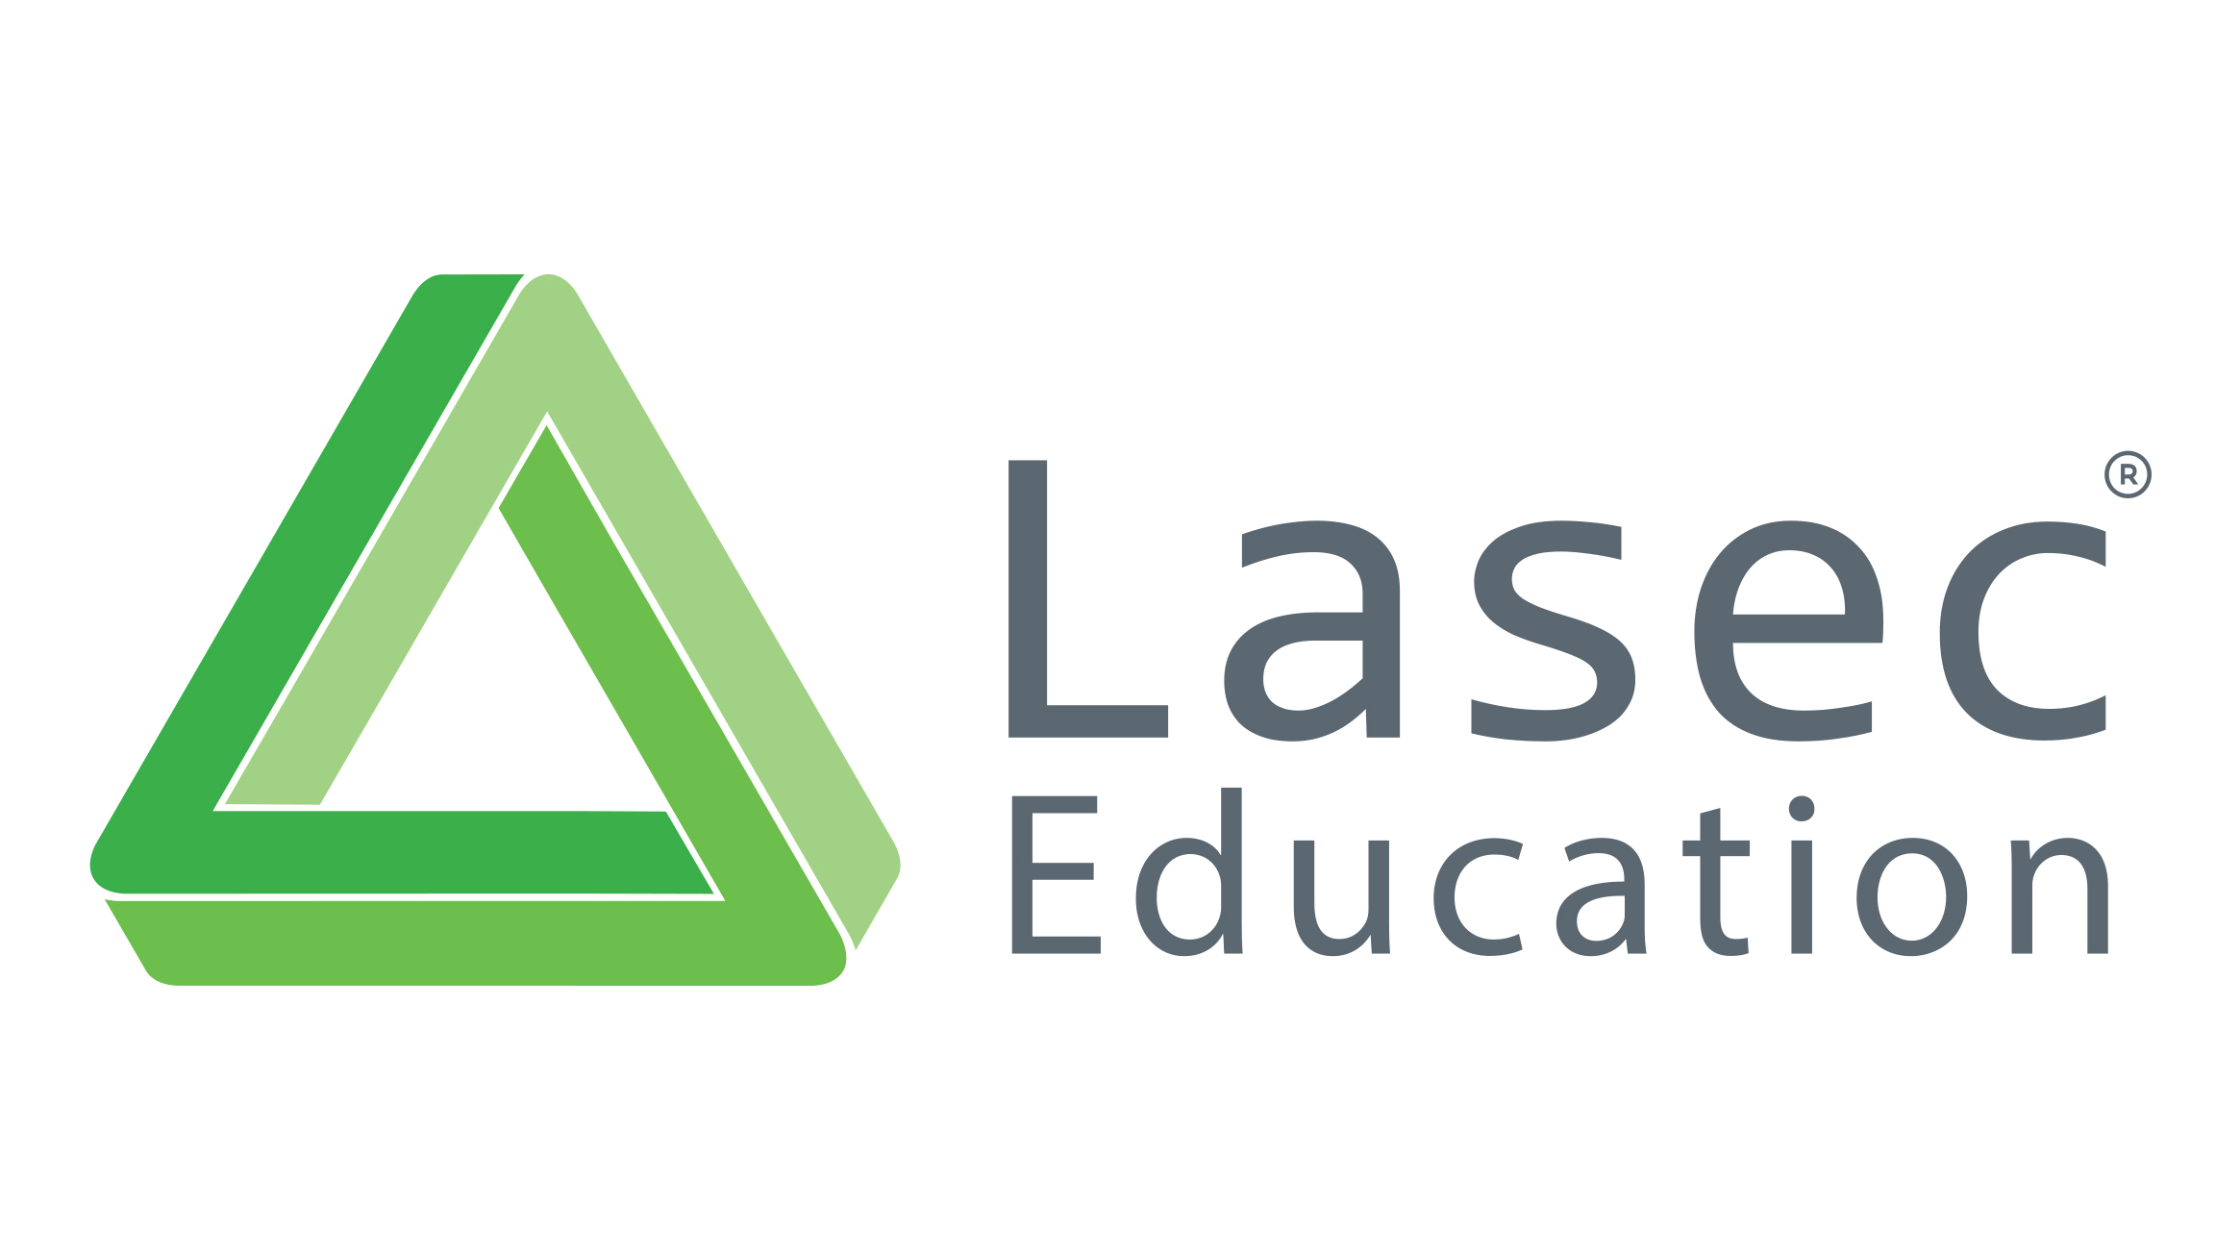 Introducing Lasec Education